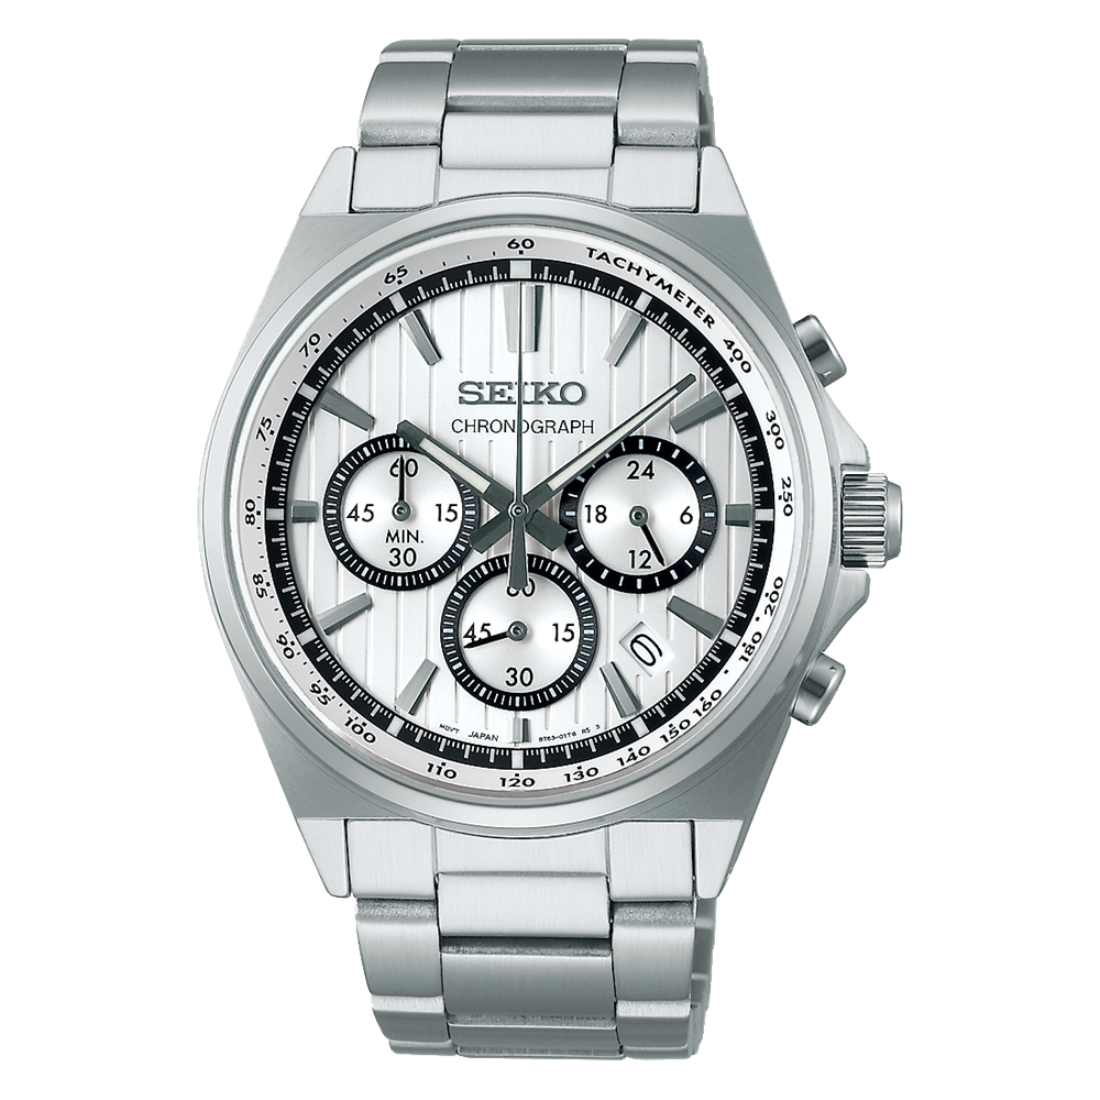 Seiko Selection S-Series SBTR031J SBTR031 Silver Dial Chronograph Watch